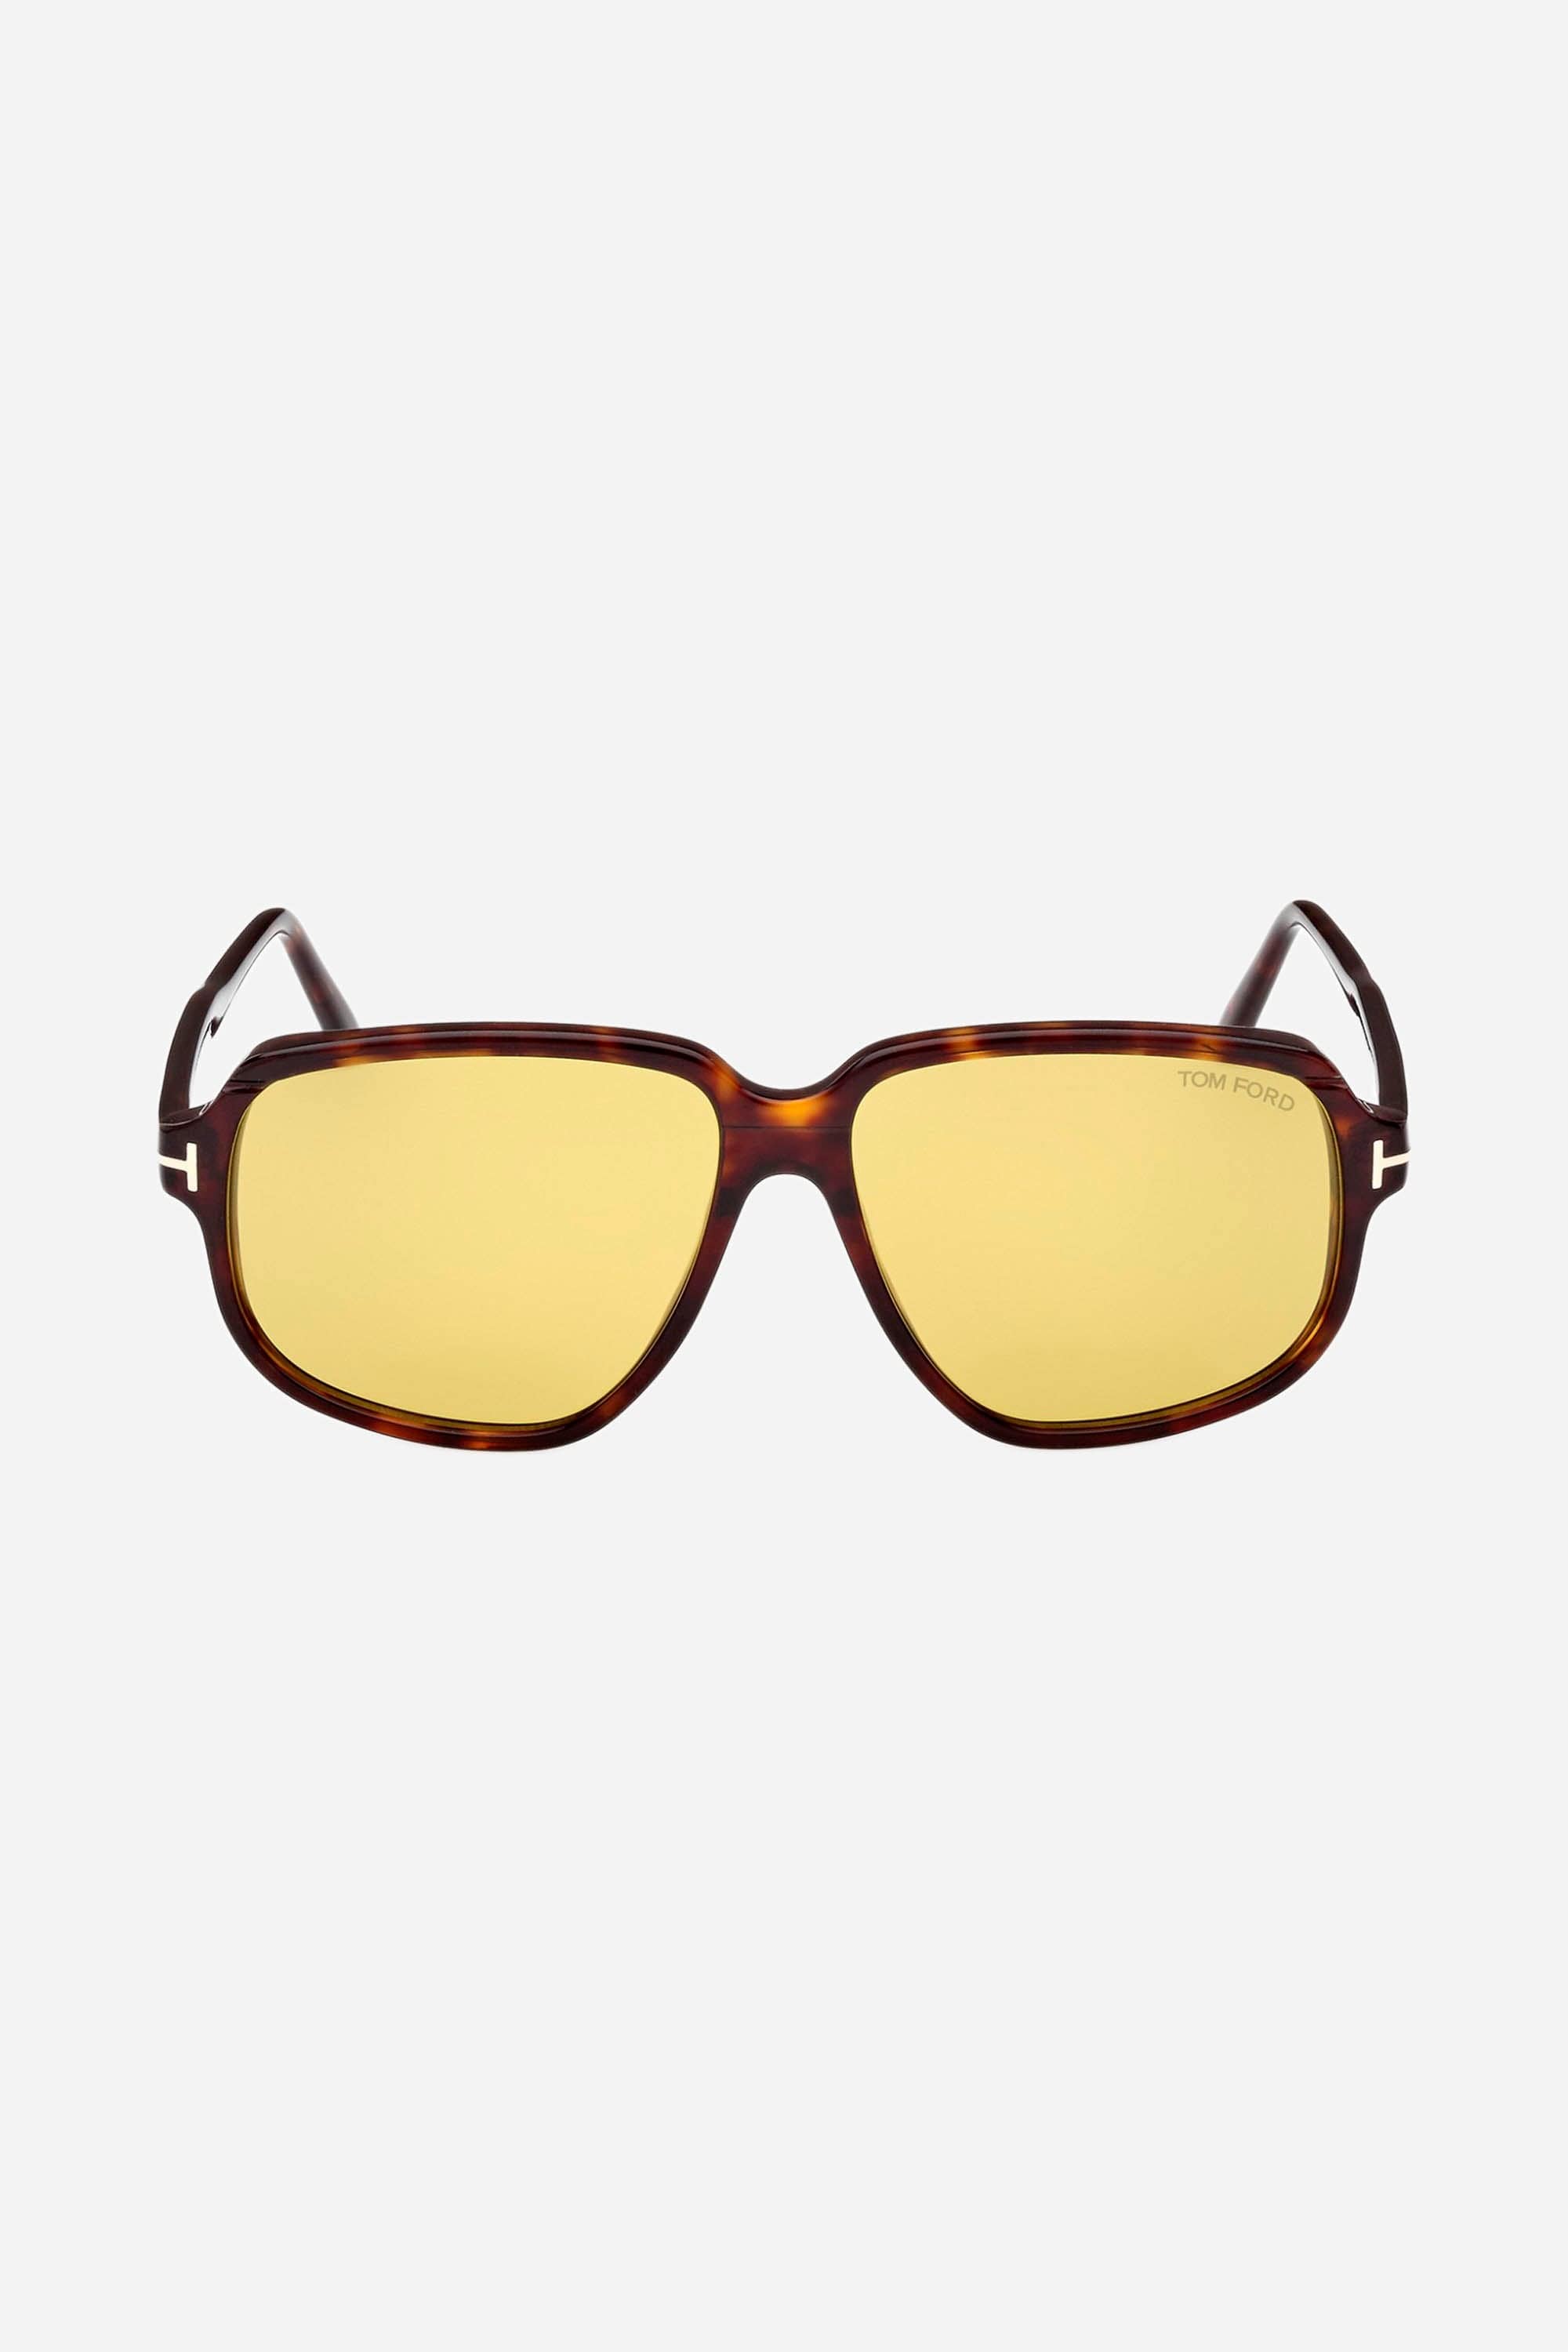 Tom Ford havana sunglasses with yellow lenses - Eyewear Club